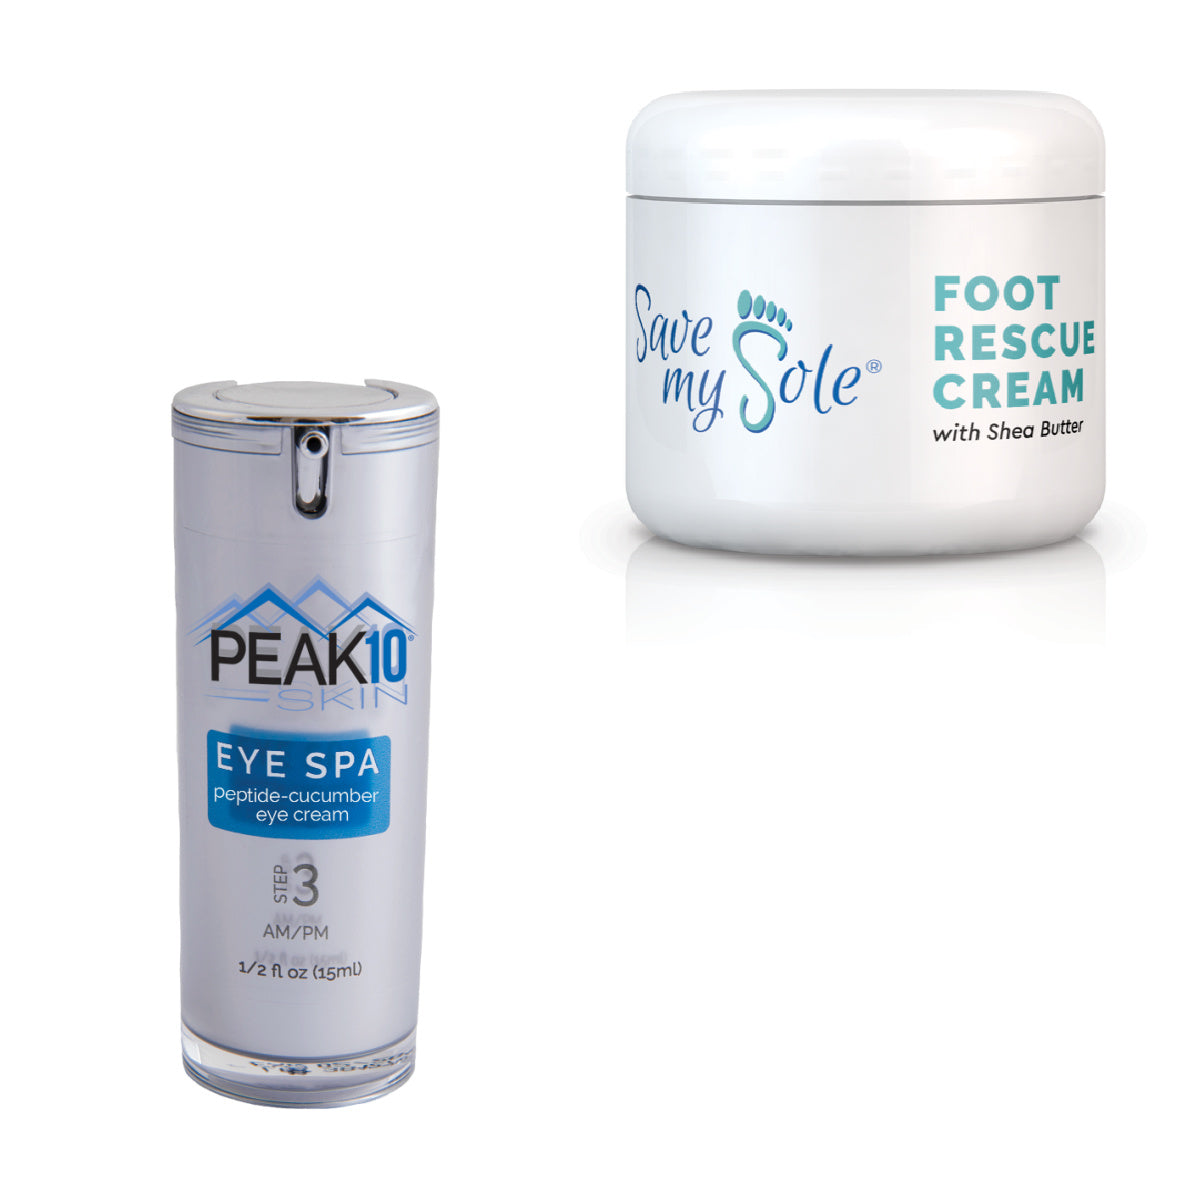 PEAK 10 SKIN Save My Sole Foot Cream and Eye Spa Peptide-Cucumber Duo